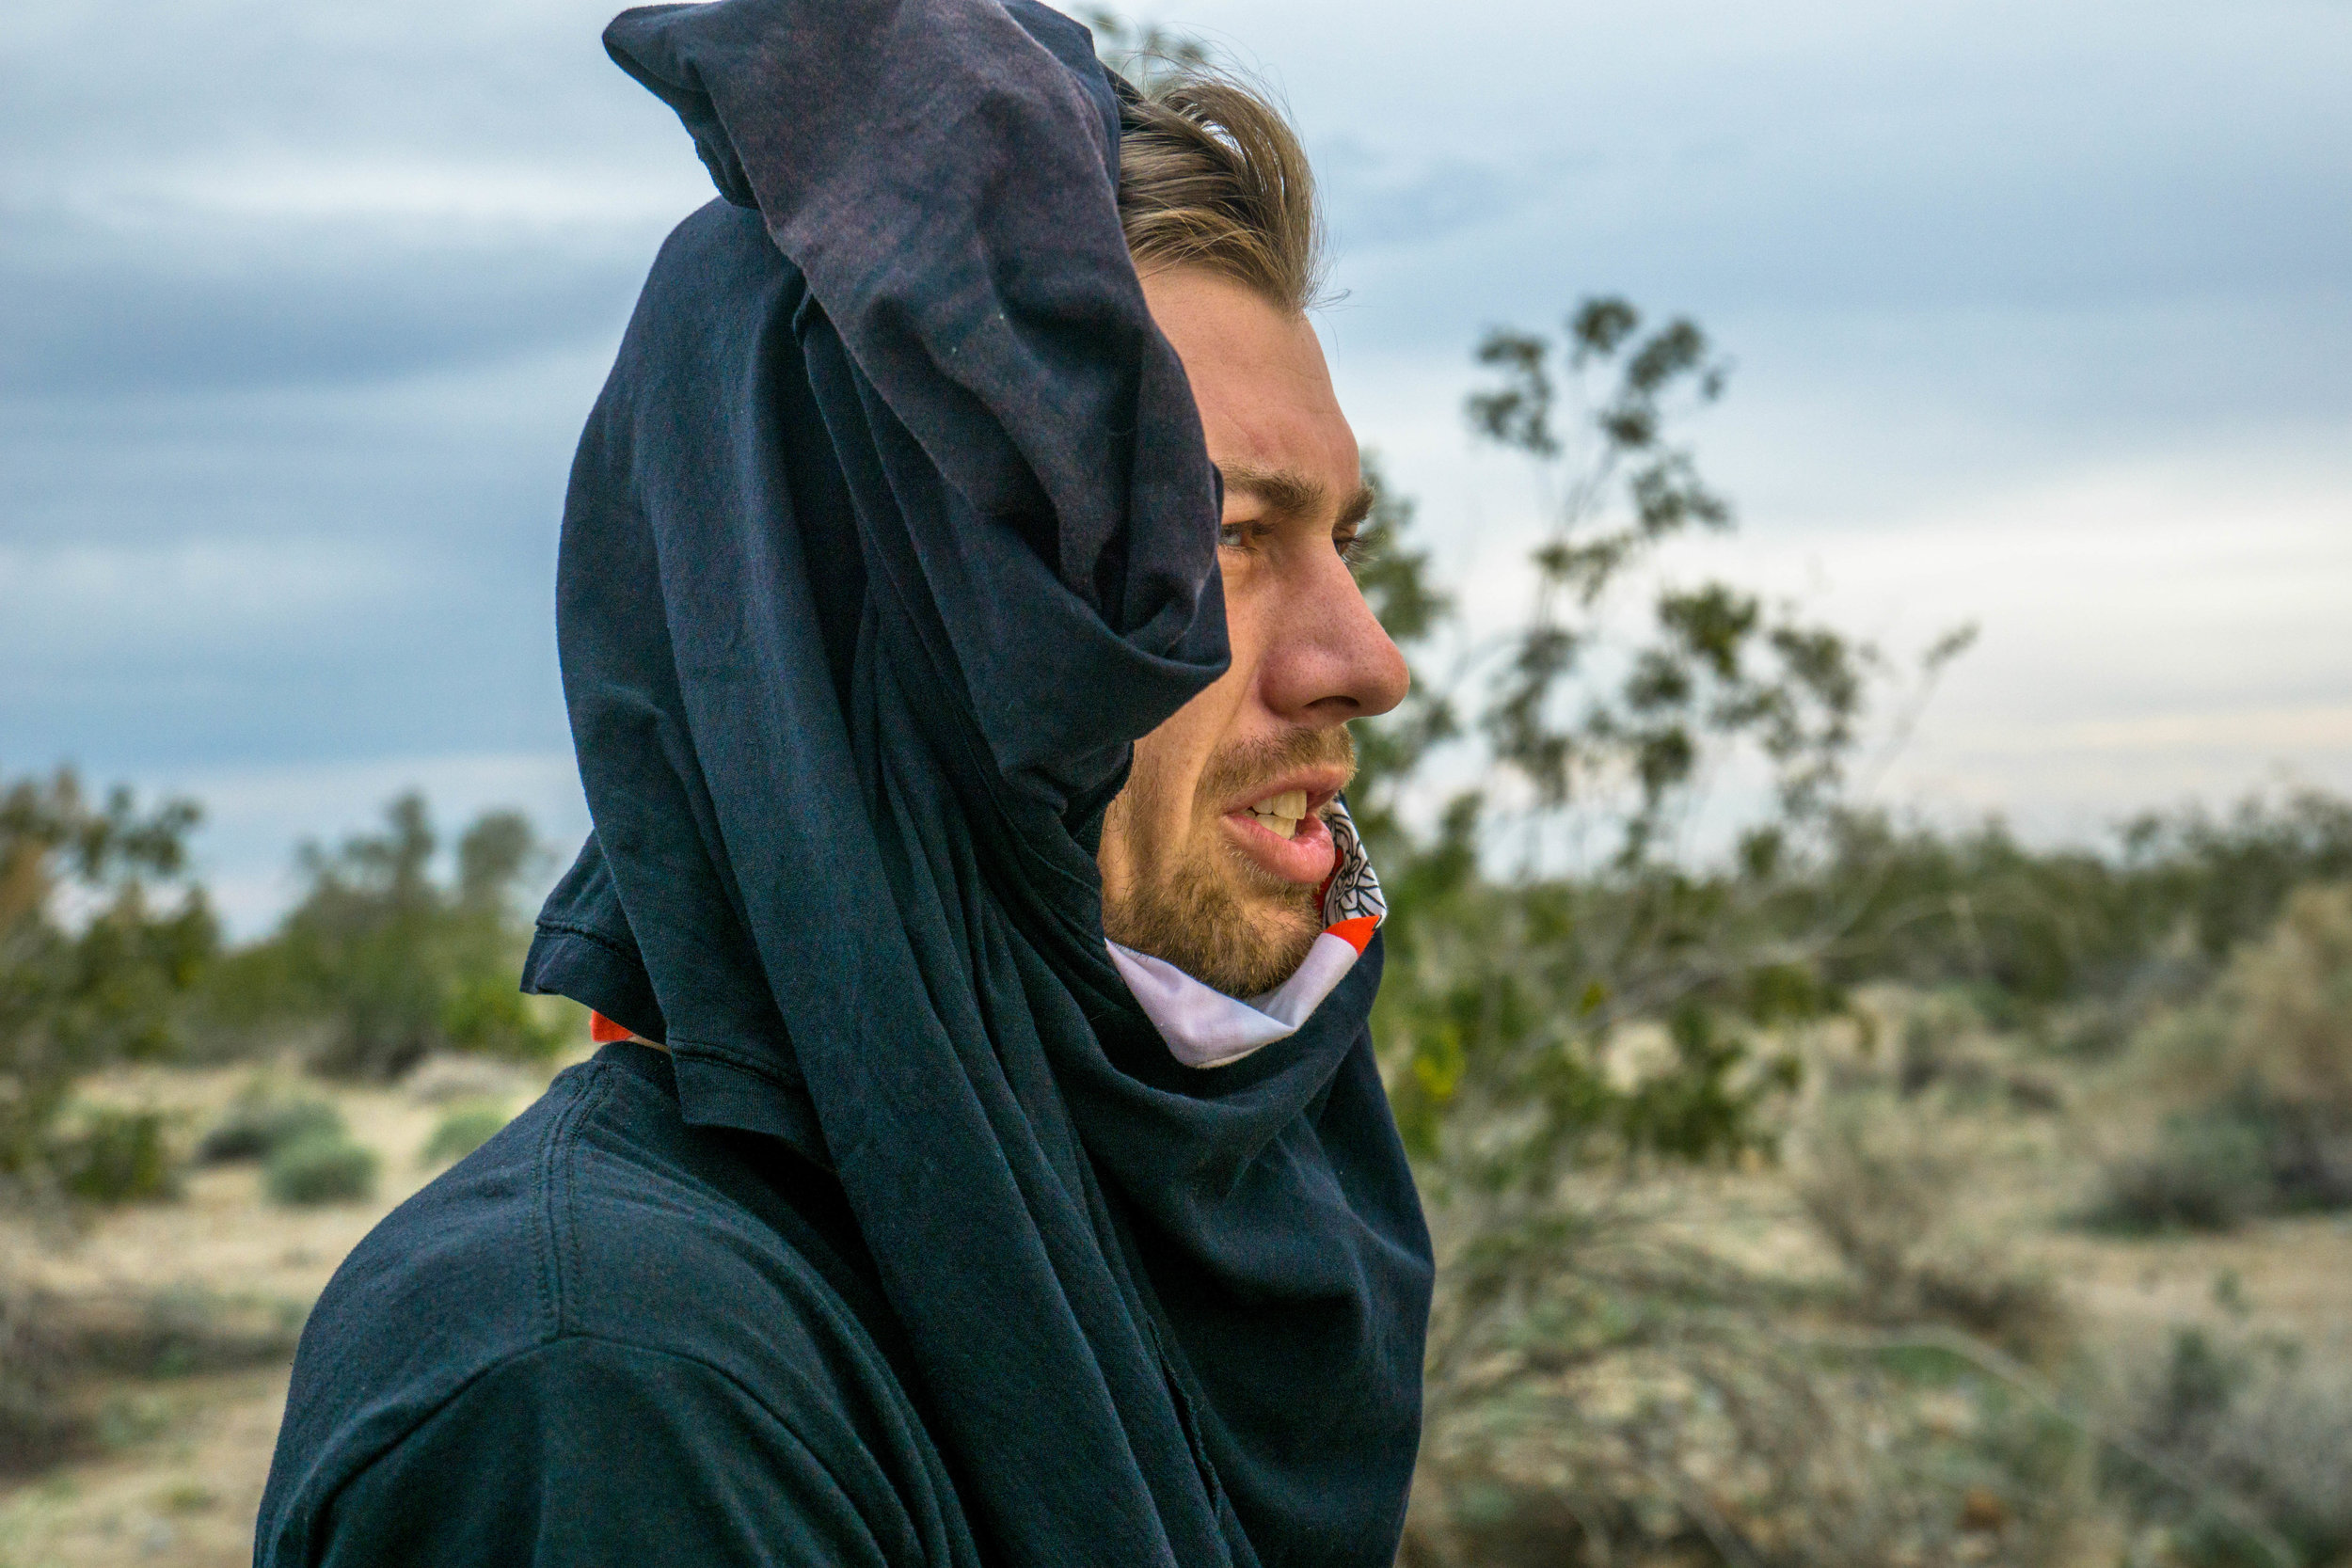 Like proper desert sultans, we wrap ourselves in garbs &amp; make-shift headcloths. 